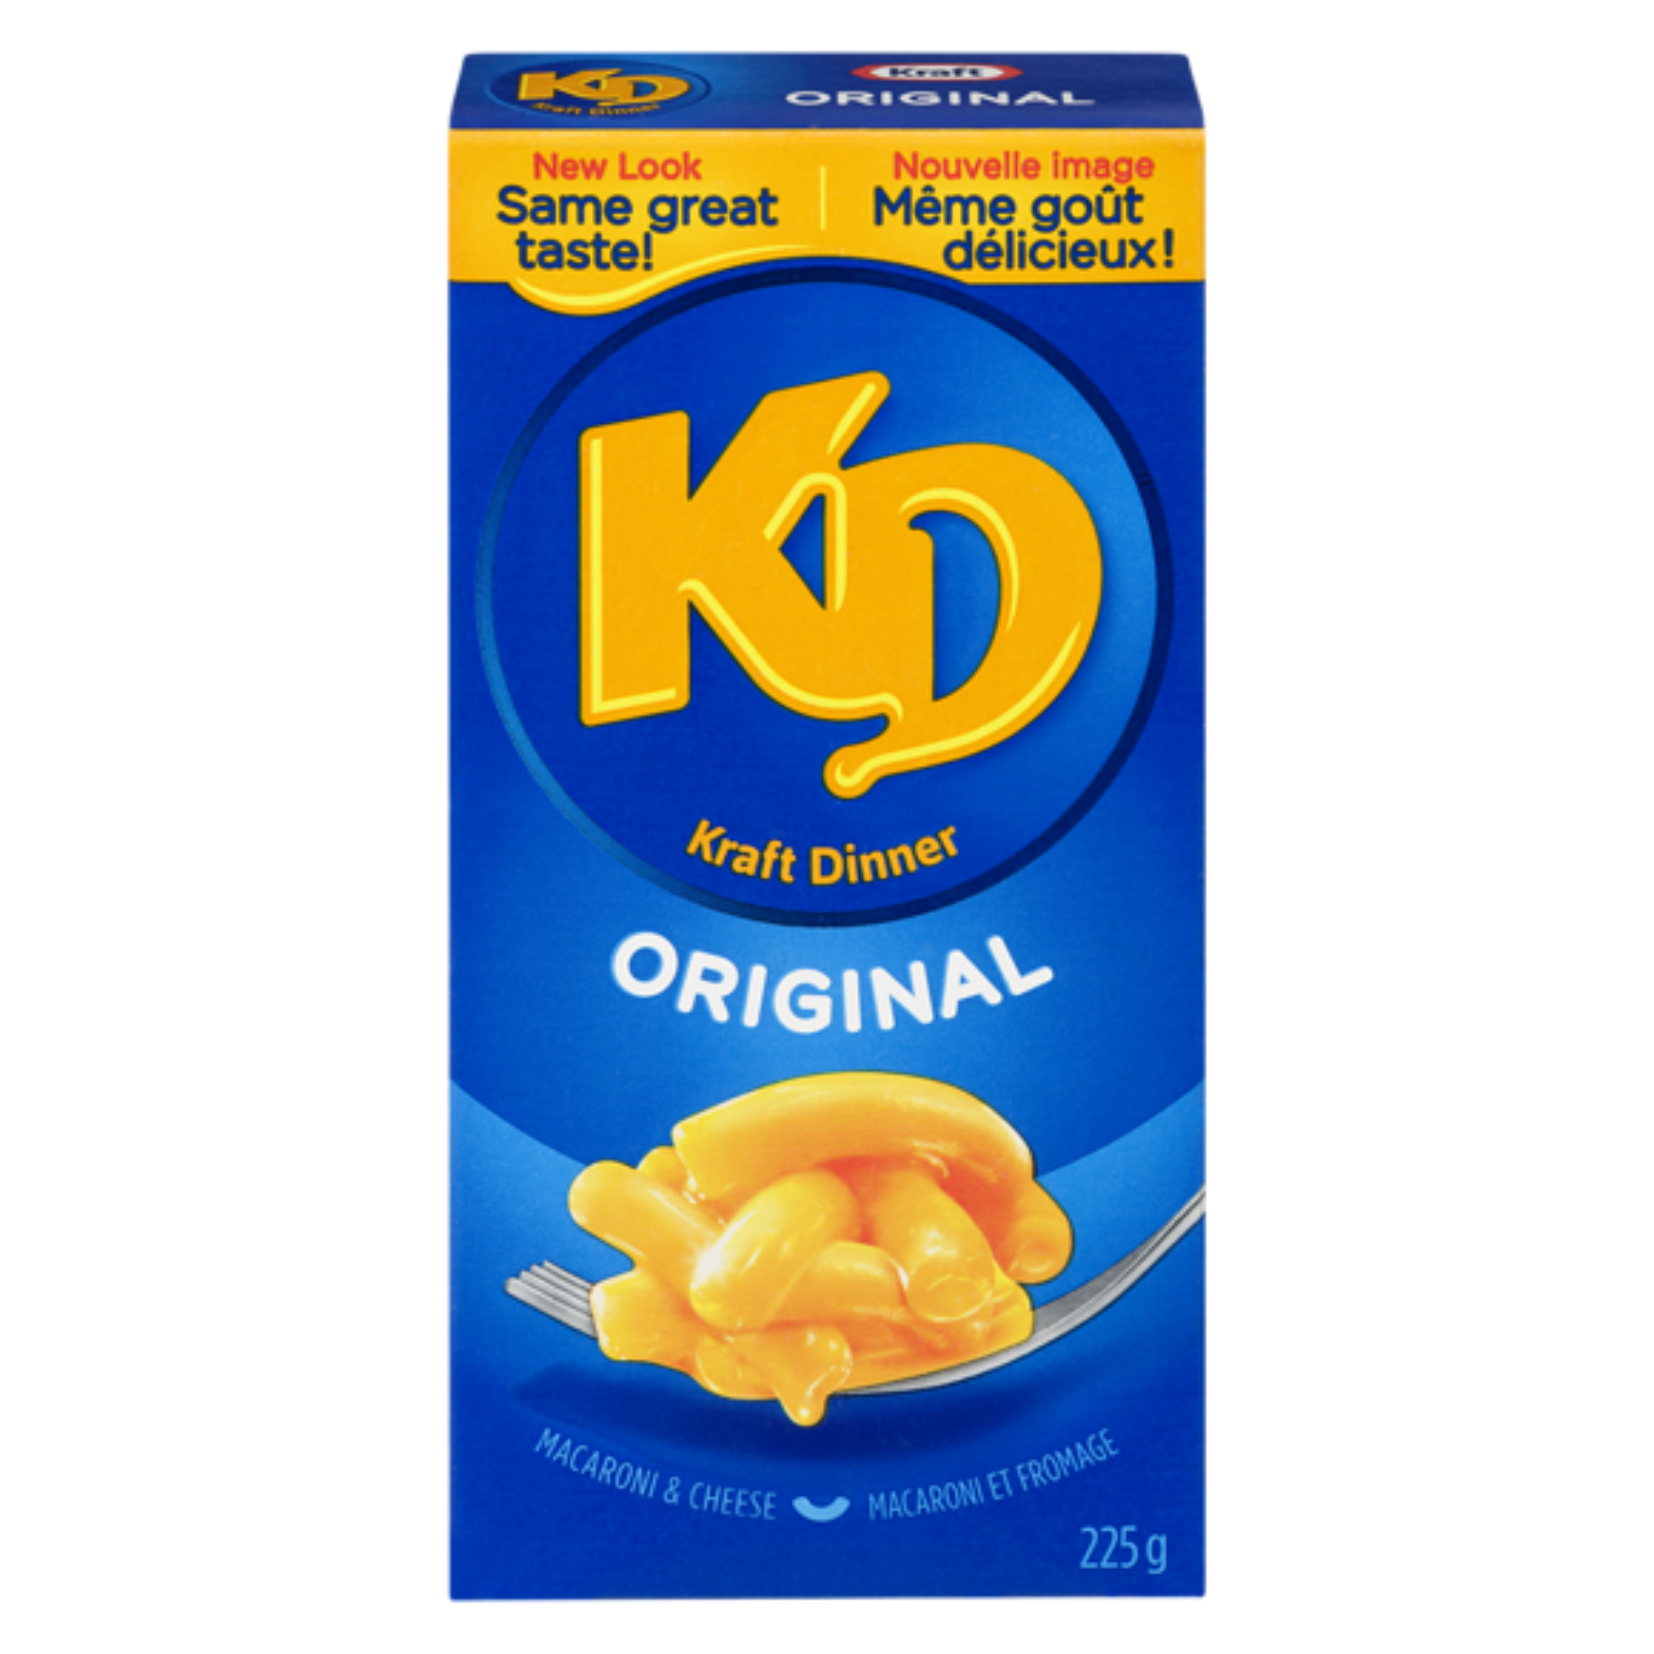 Kraft Dinner Original Macaroni & Cheese 200g